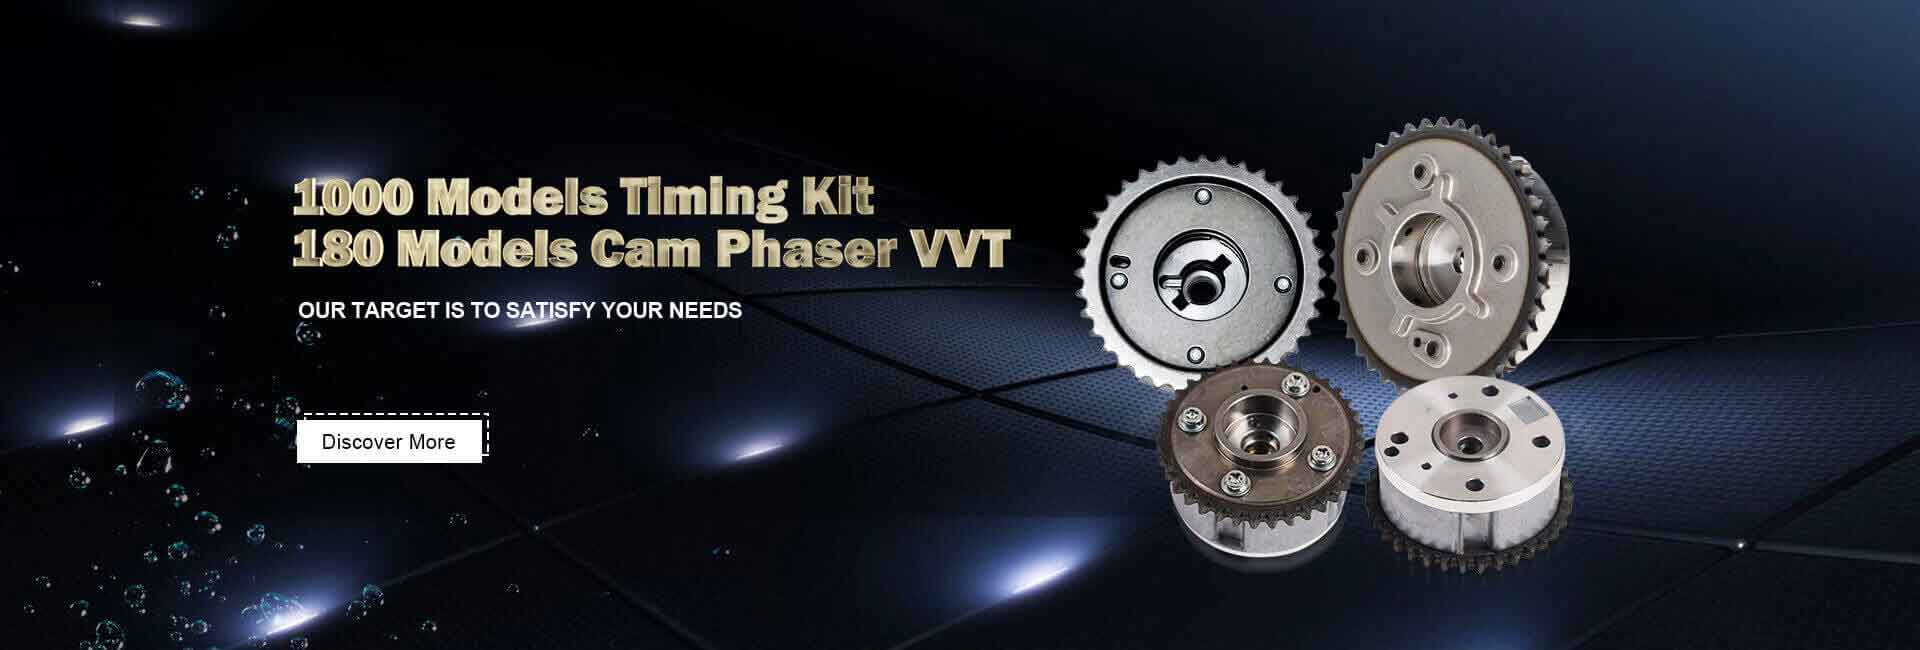 TimeK-Timing-Kit-with-Cam-Phaser-VVT-Gear